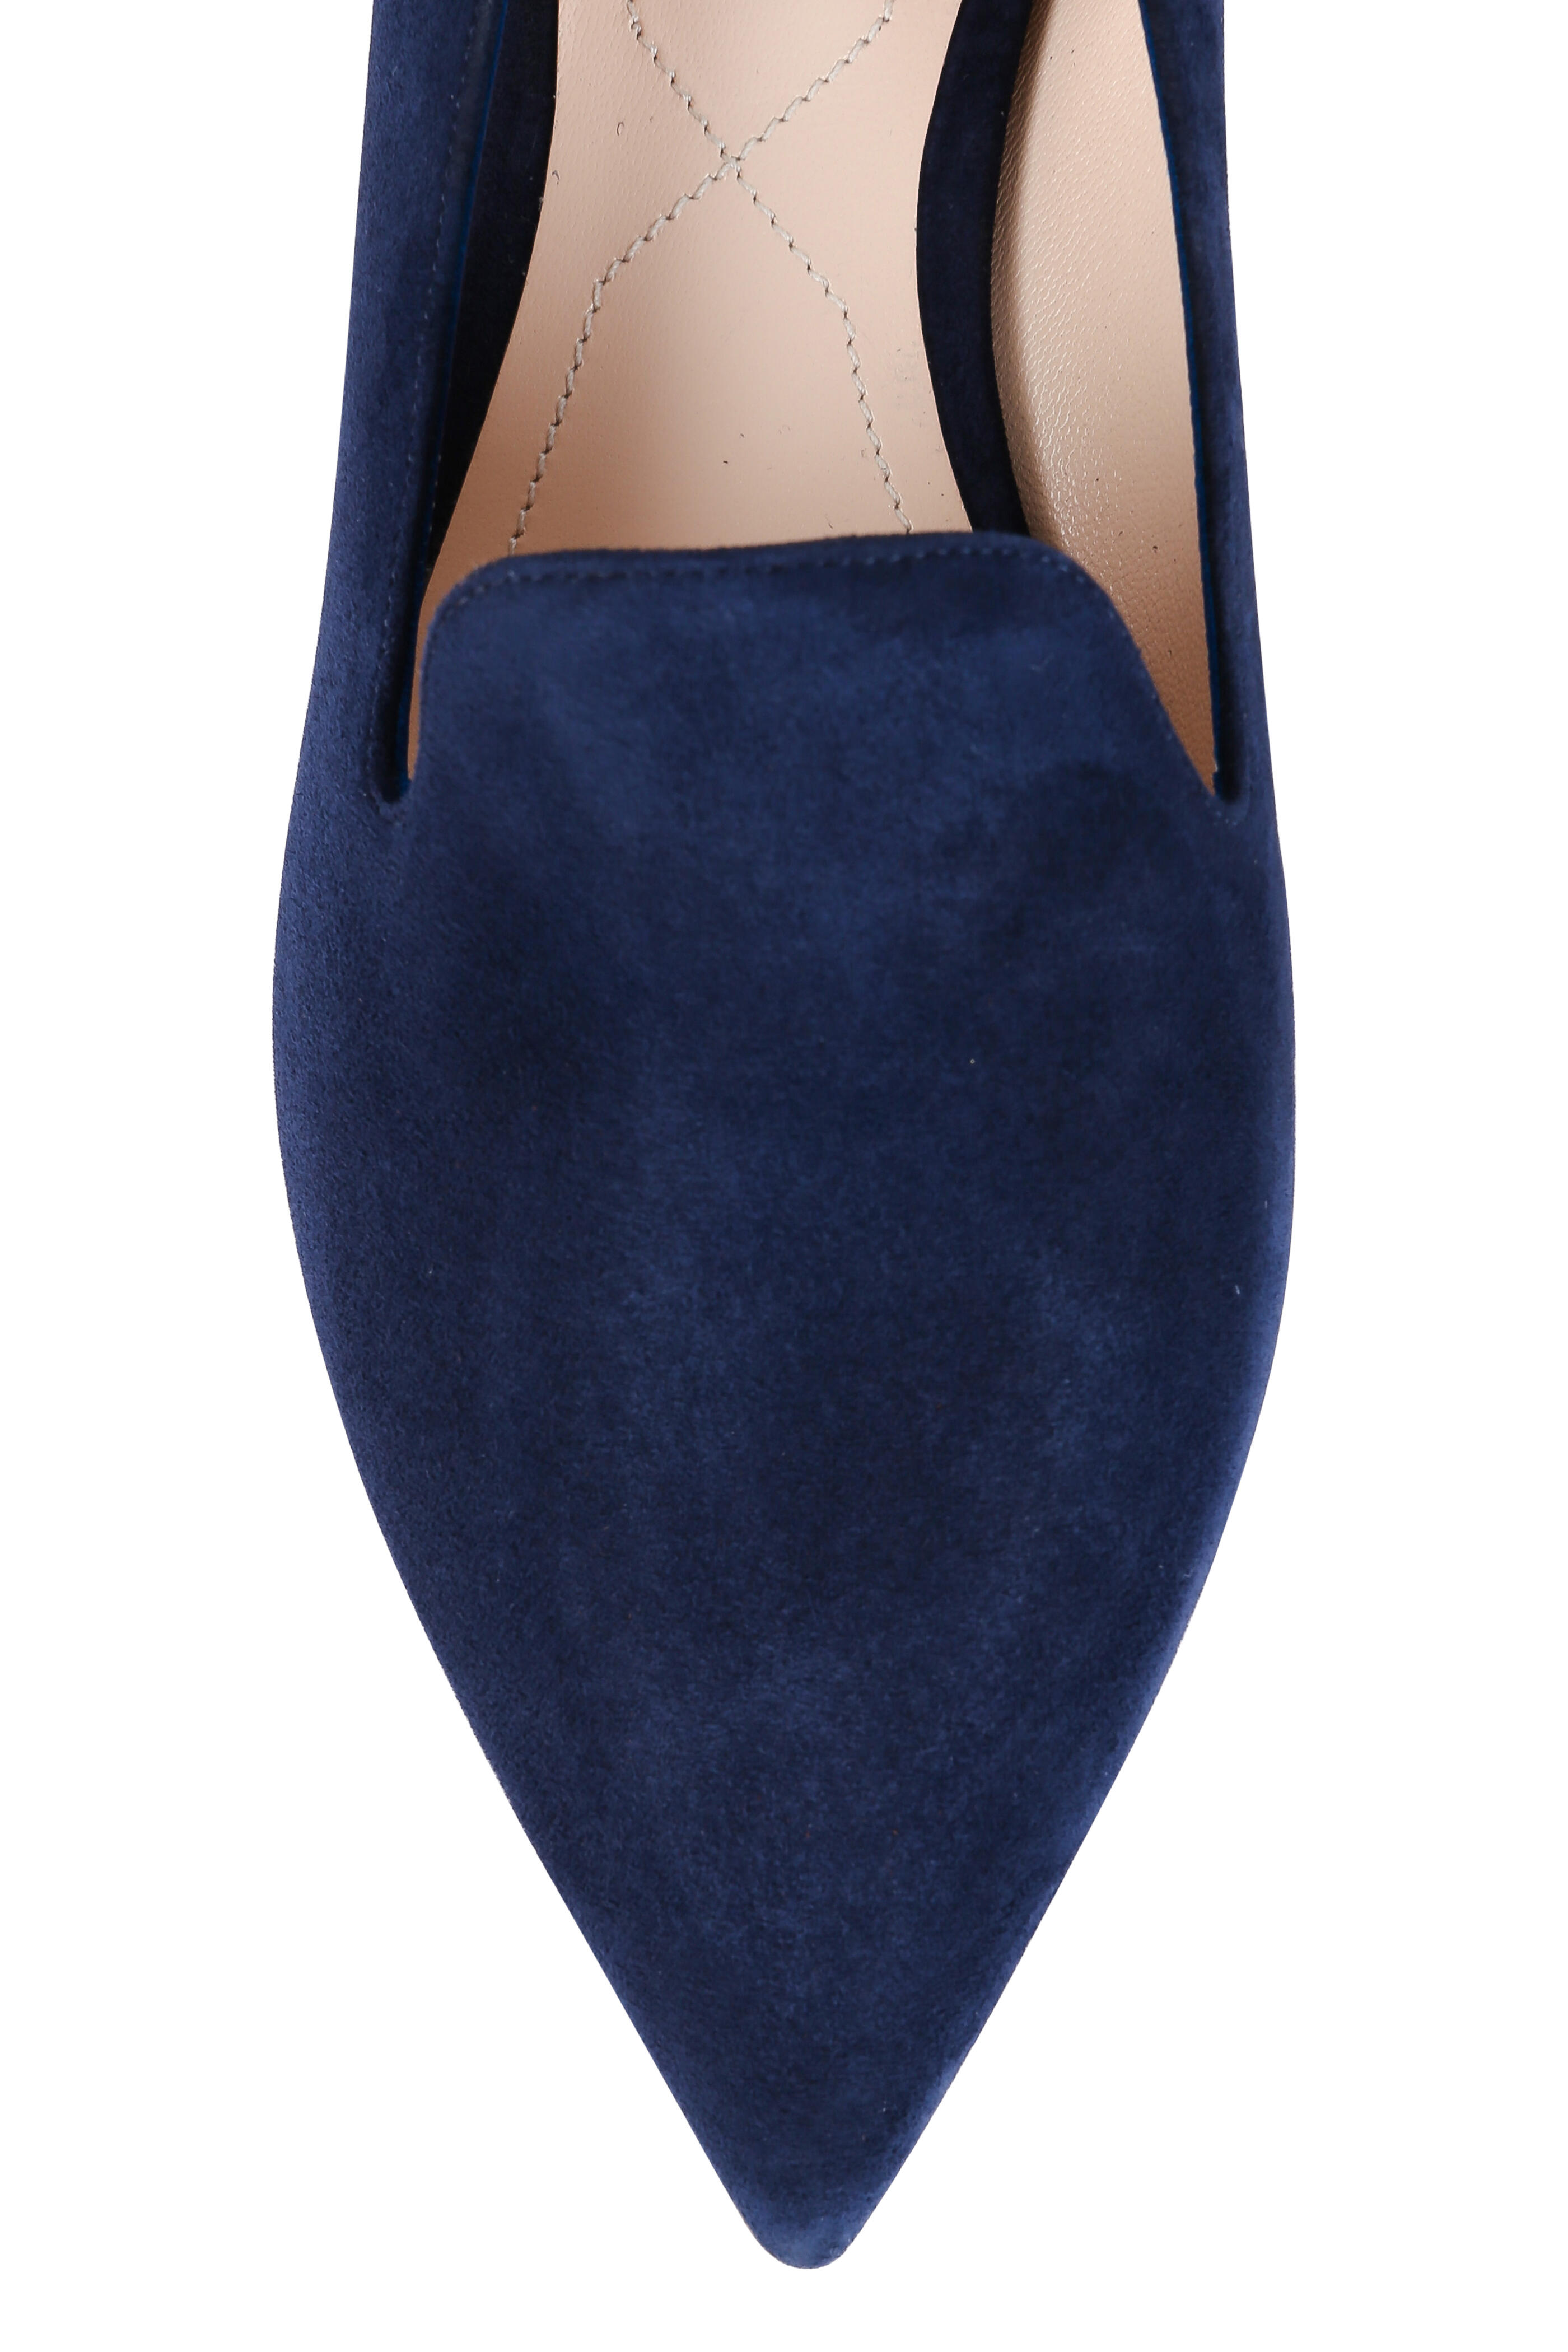 $750 Nicholas Kirkwood Ink Blue Suede Casati Pearl Loafers Size 36.5